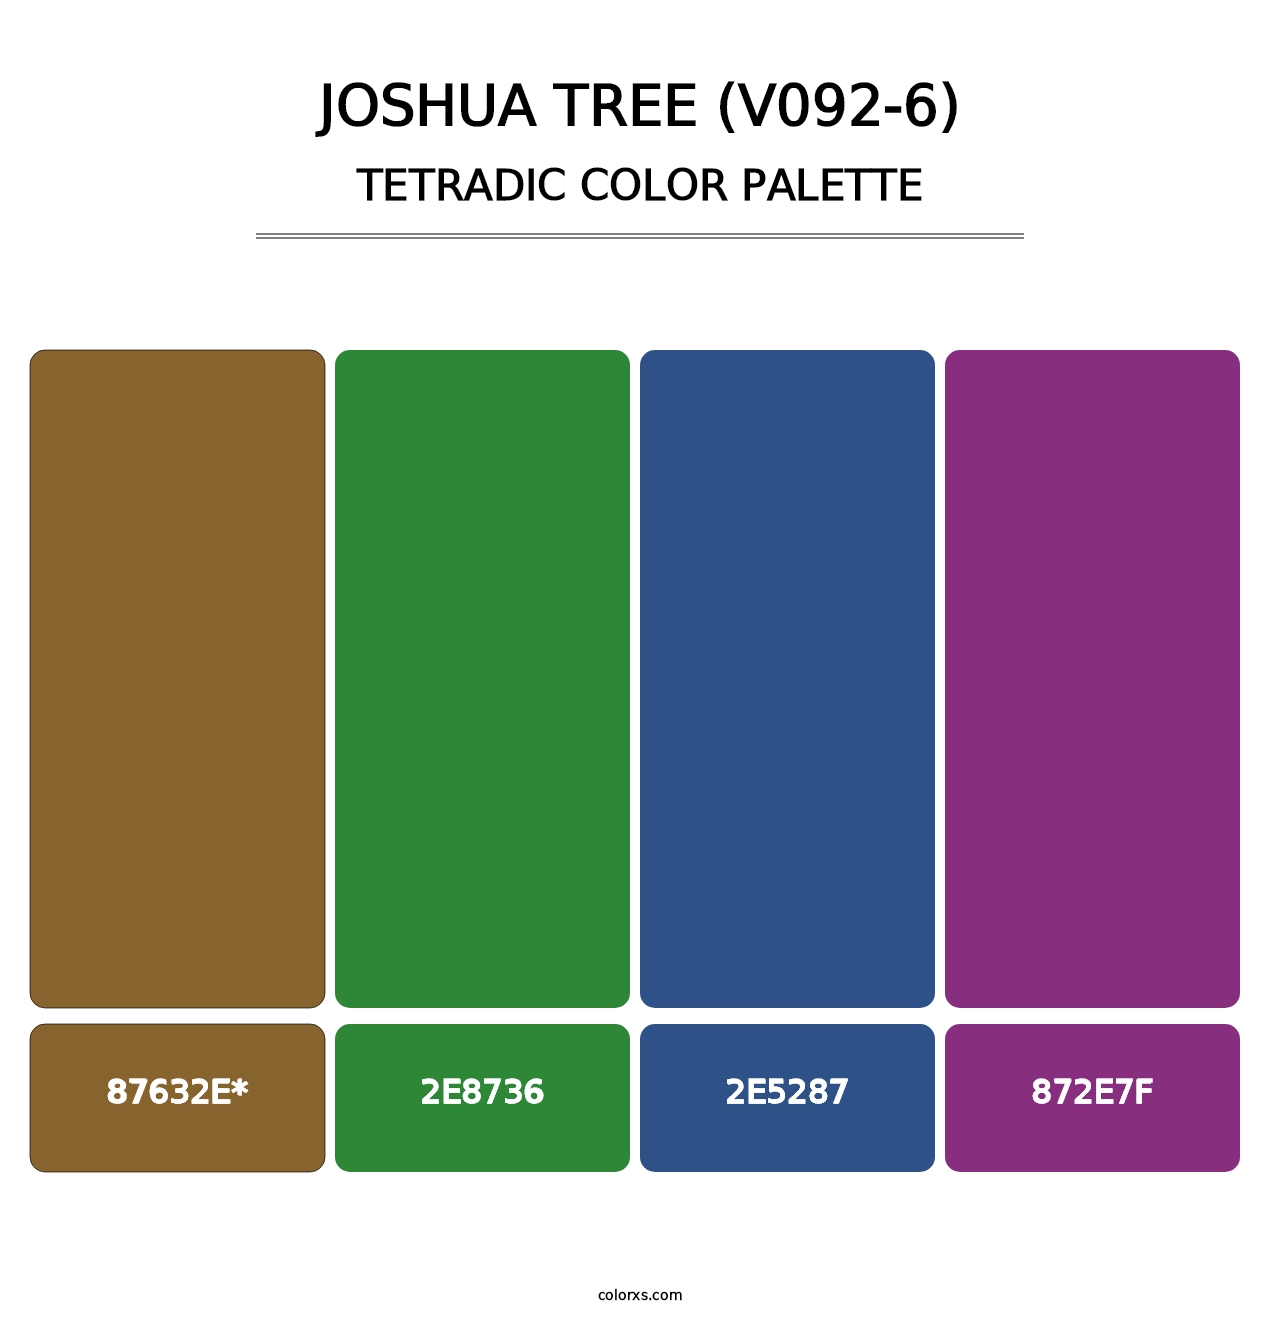 Joshua Tree (V092-6) - Tetradic Color Palette